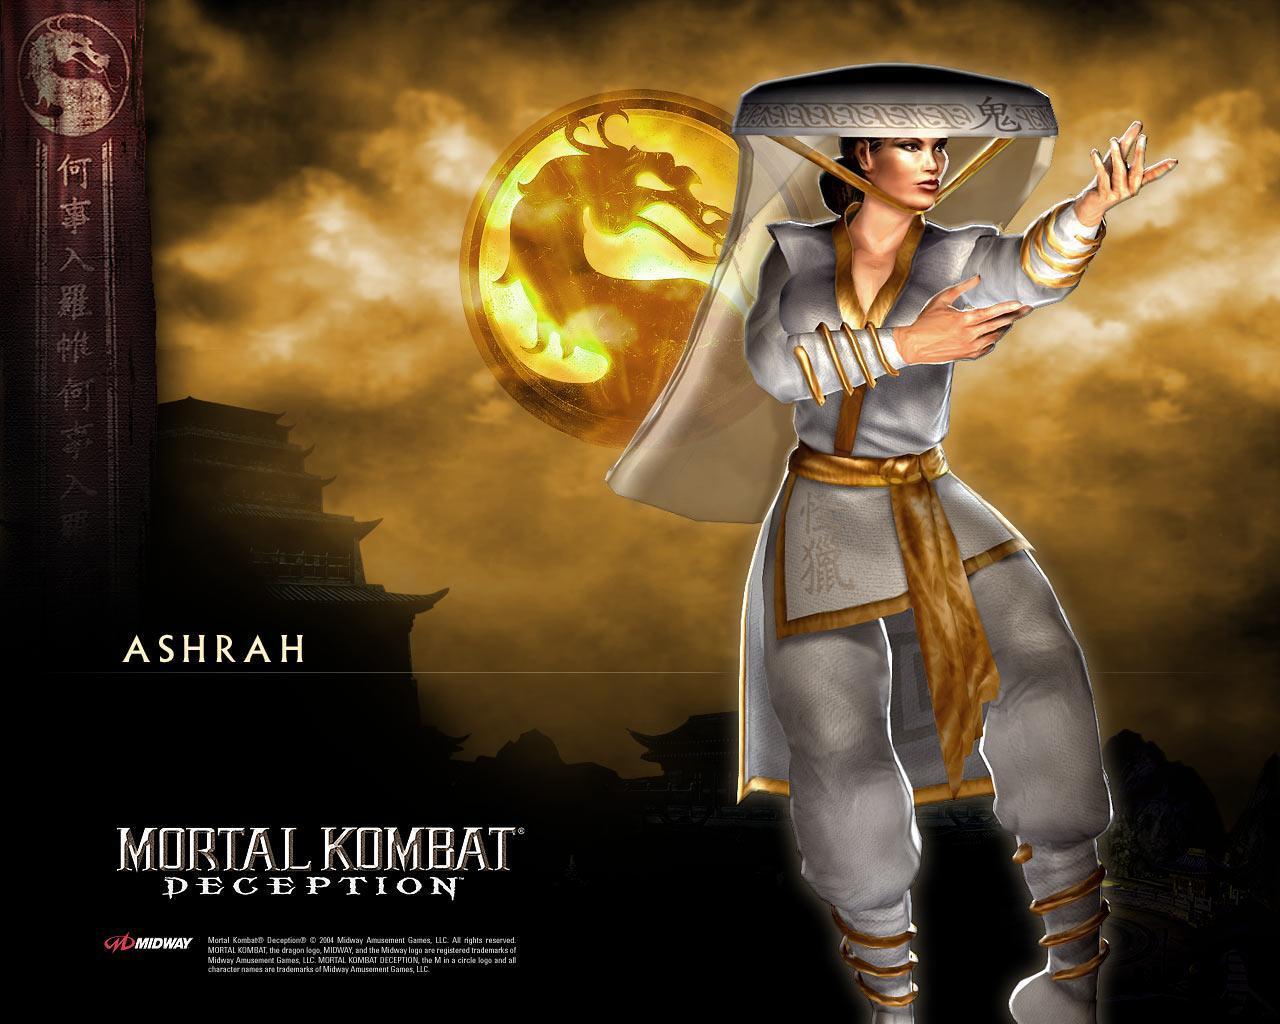 MK wallpapers - Mortal Kombat Wallpaper (27864310) - Fanpop